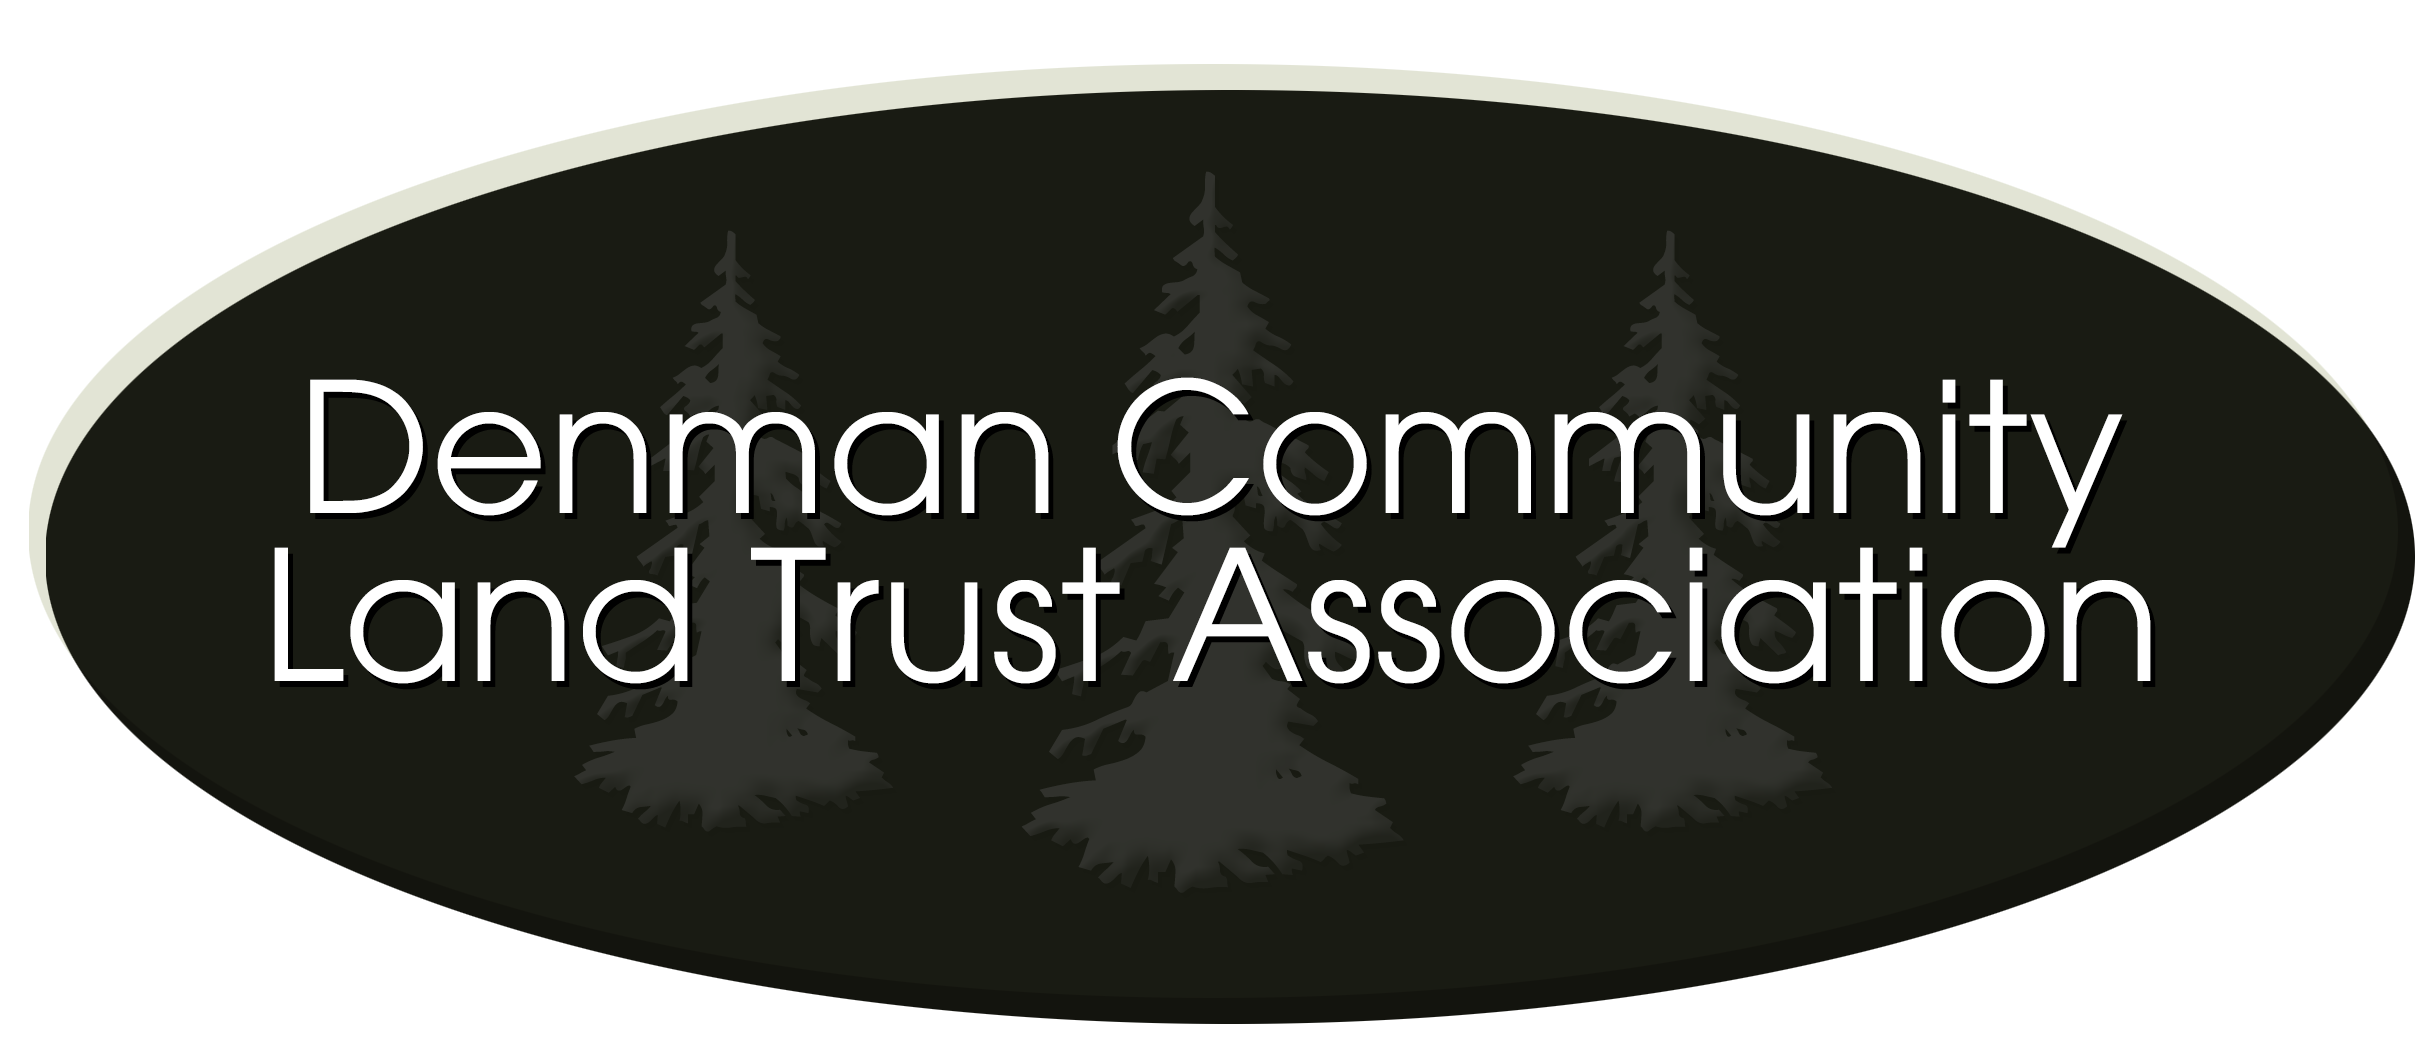 Denman Community Land Trust Association